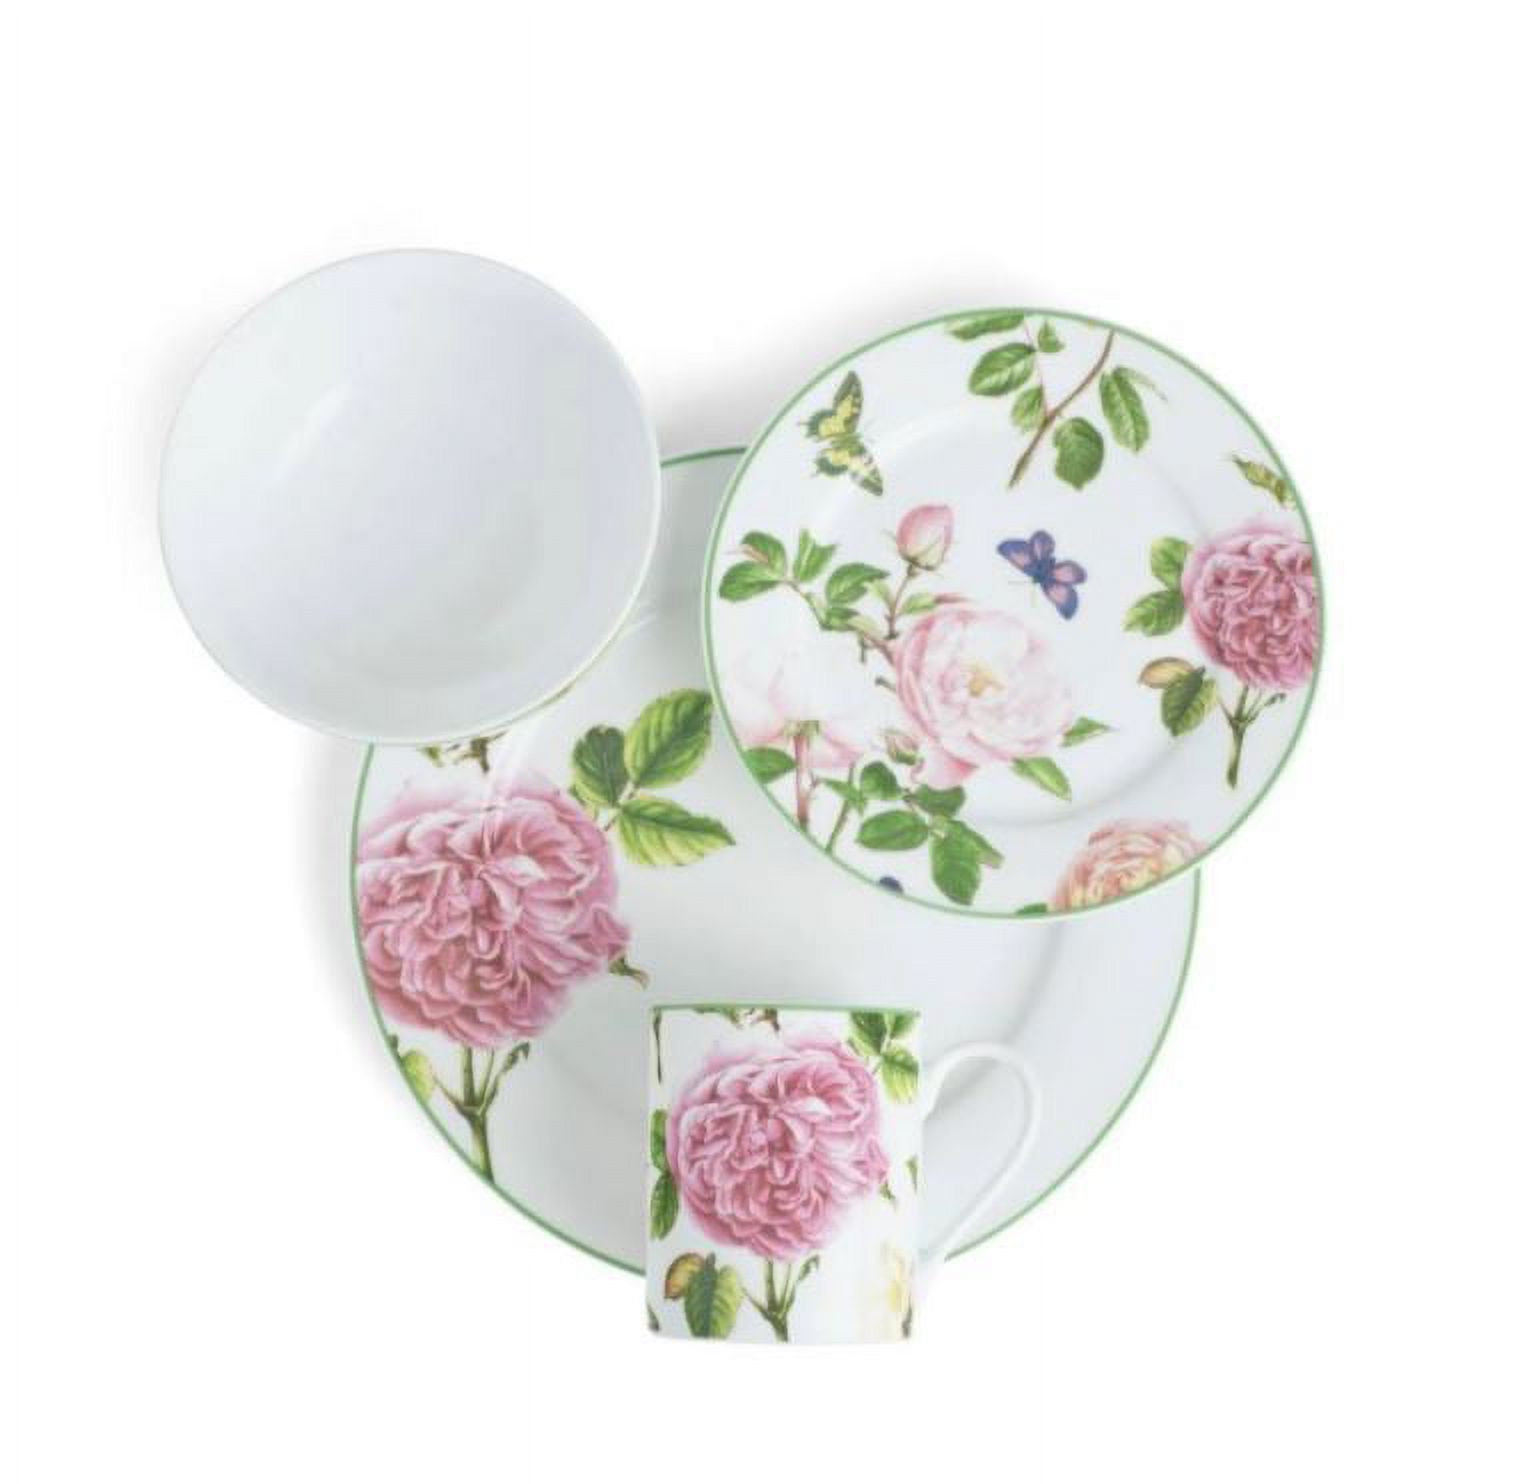 Spode Home Roses 16 Piece Dinnerware Set, Service for 4, Made of Fine Porcelain, Dishwasher Safe - image 4 of 5